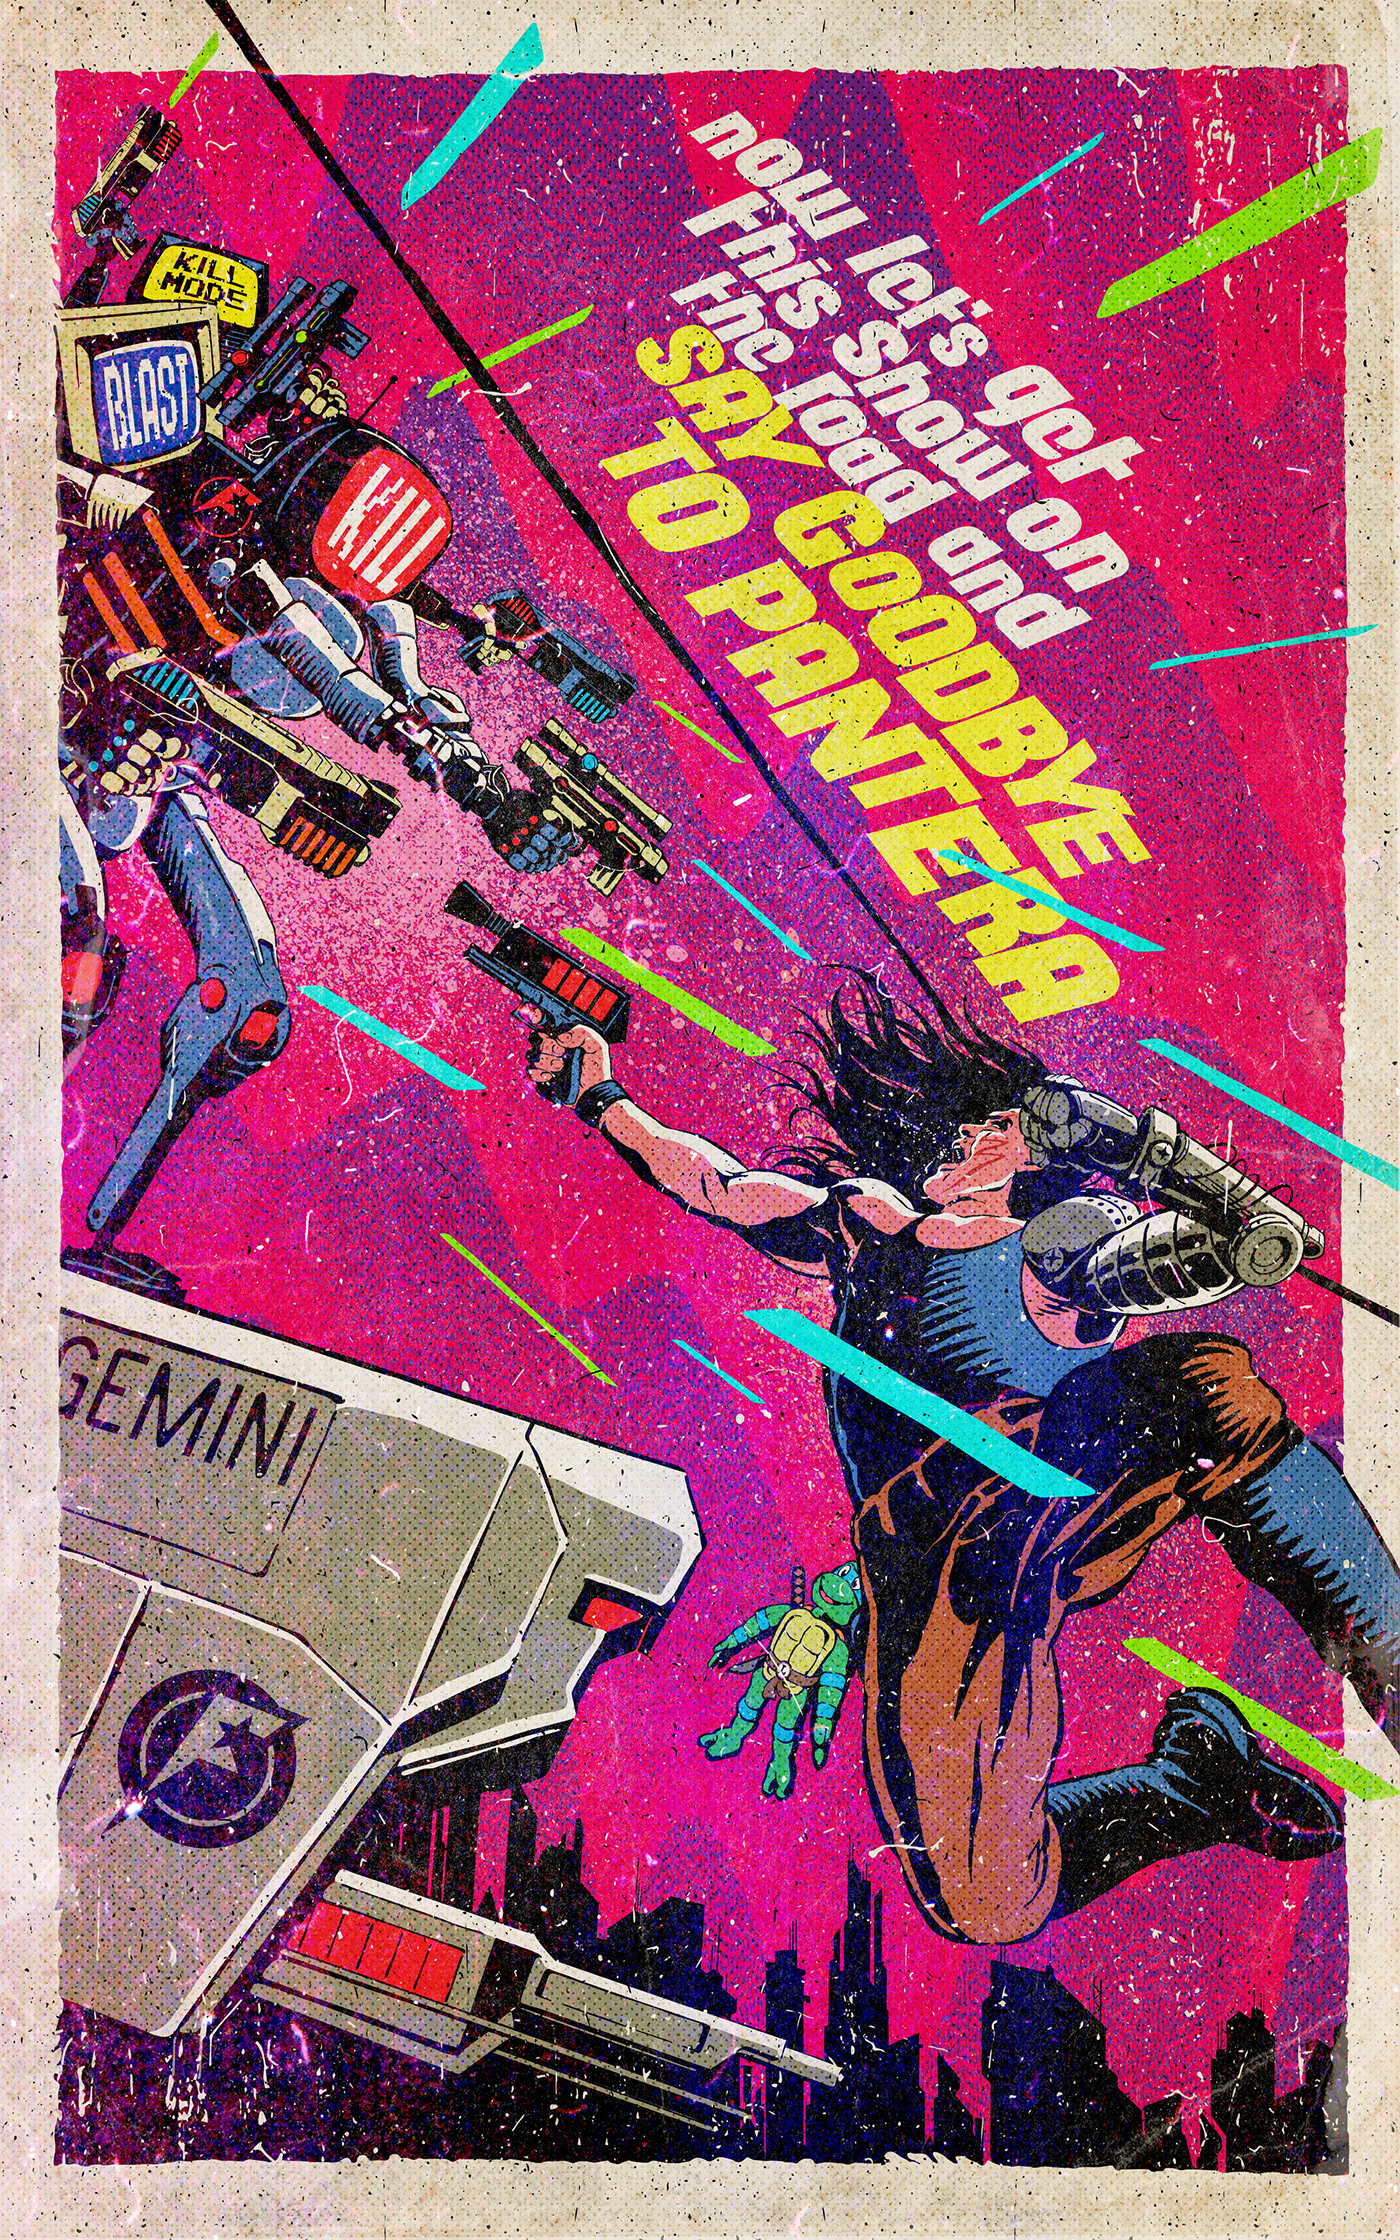 1980's Battlestar Galactica ESCAPE FROM NY John Carpenter movie poster novella sci-fi Scifi space opera star wars